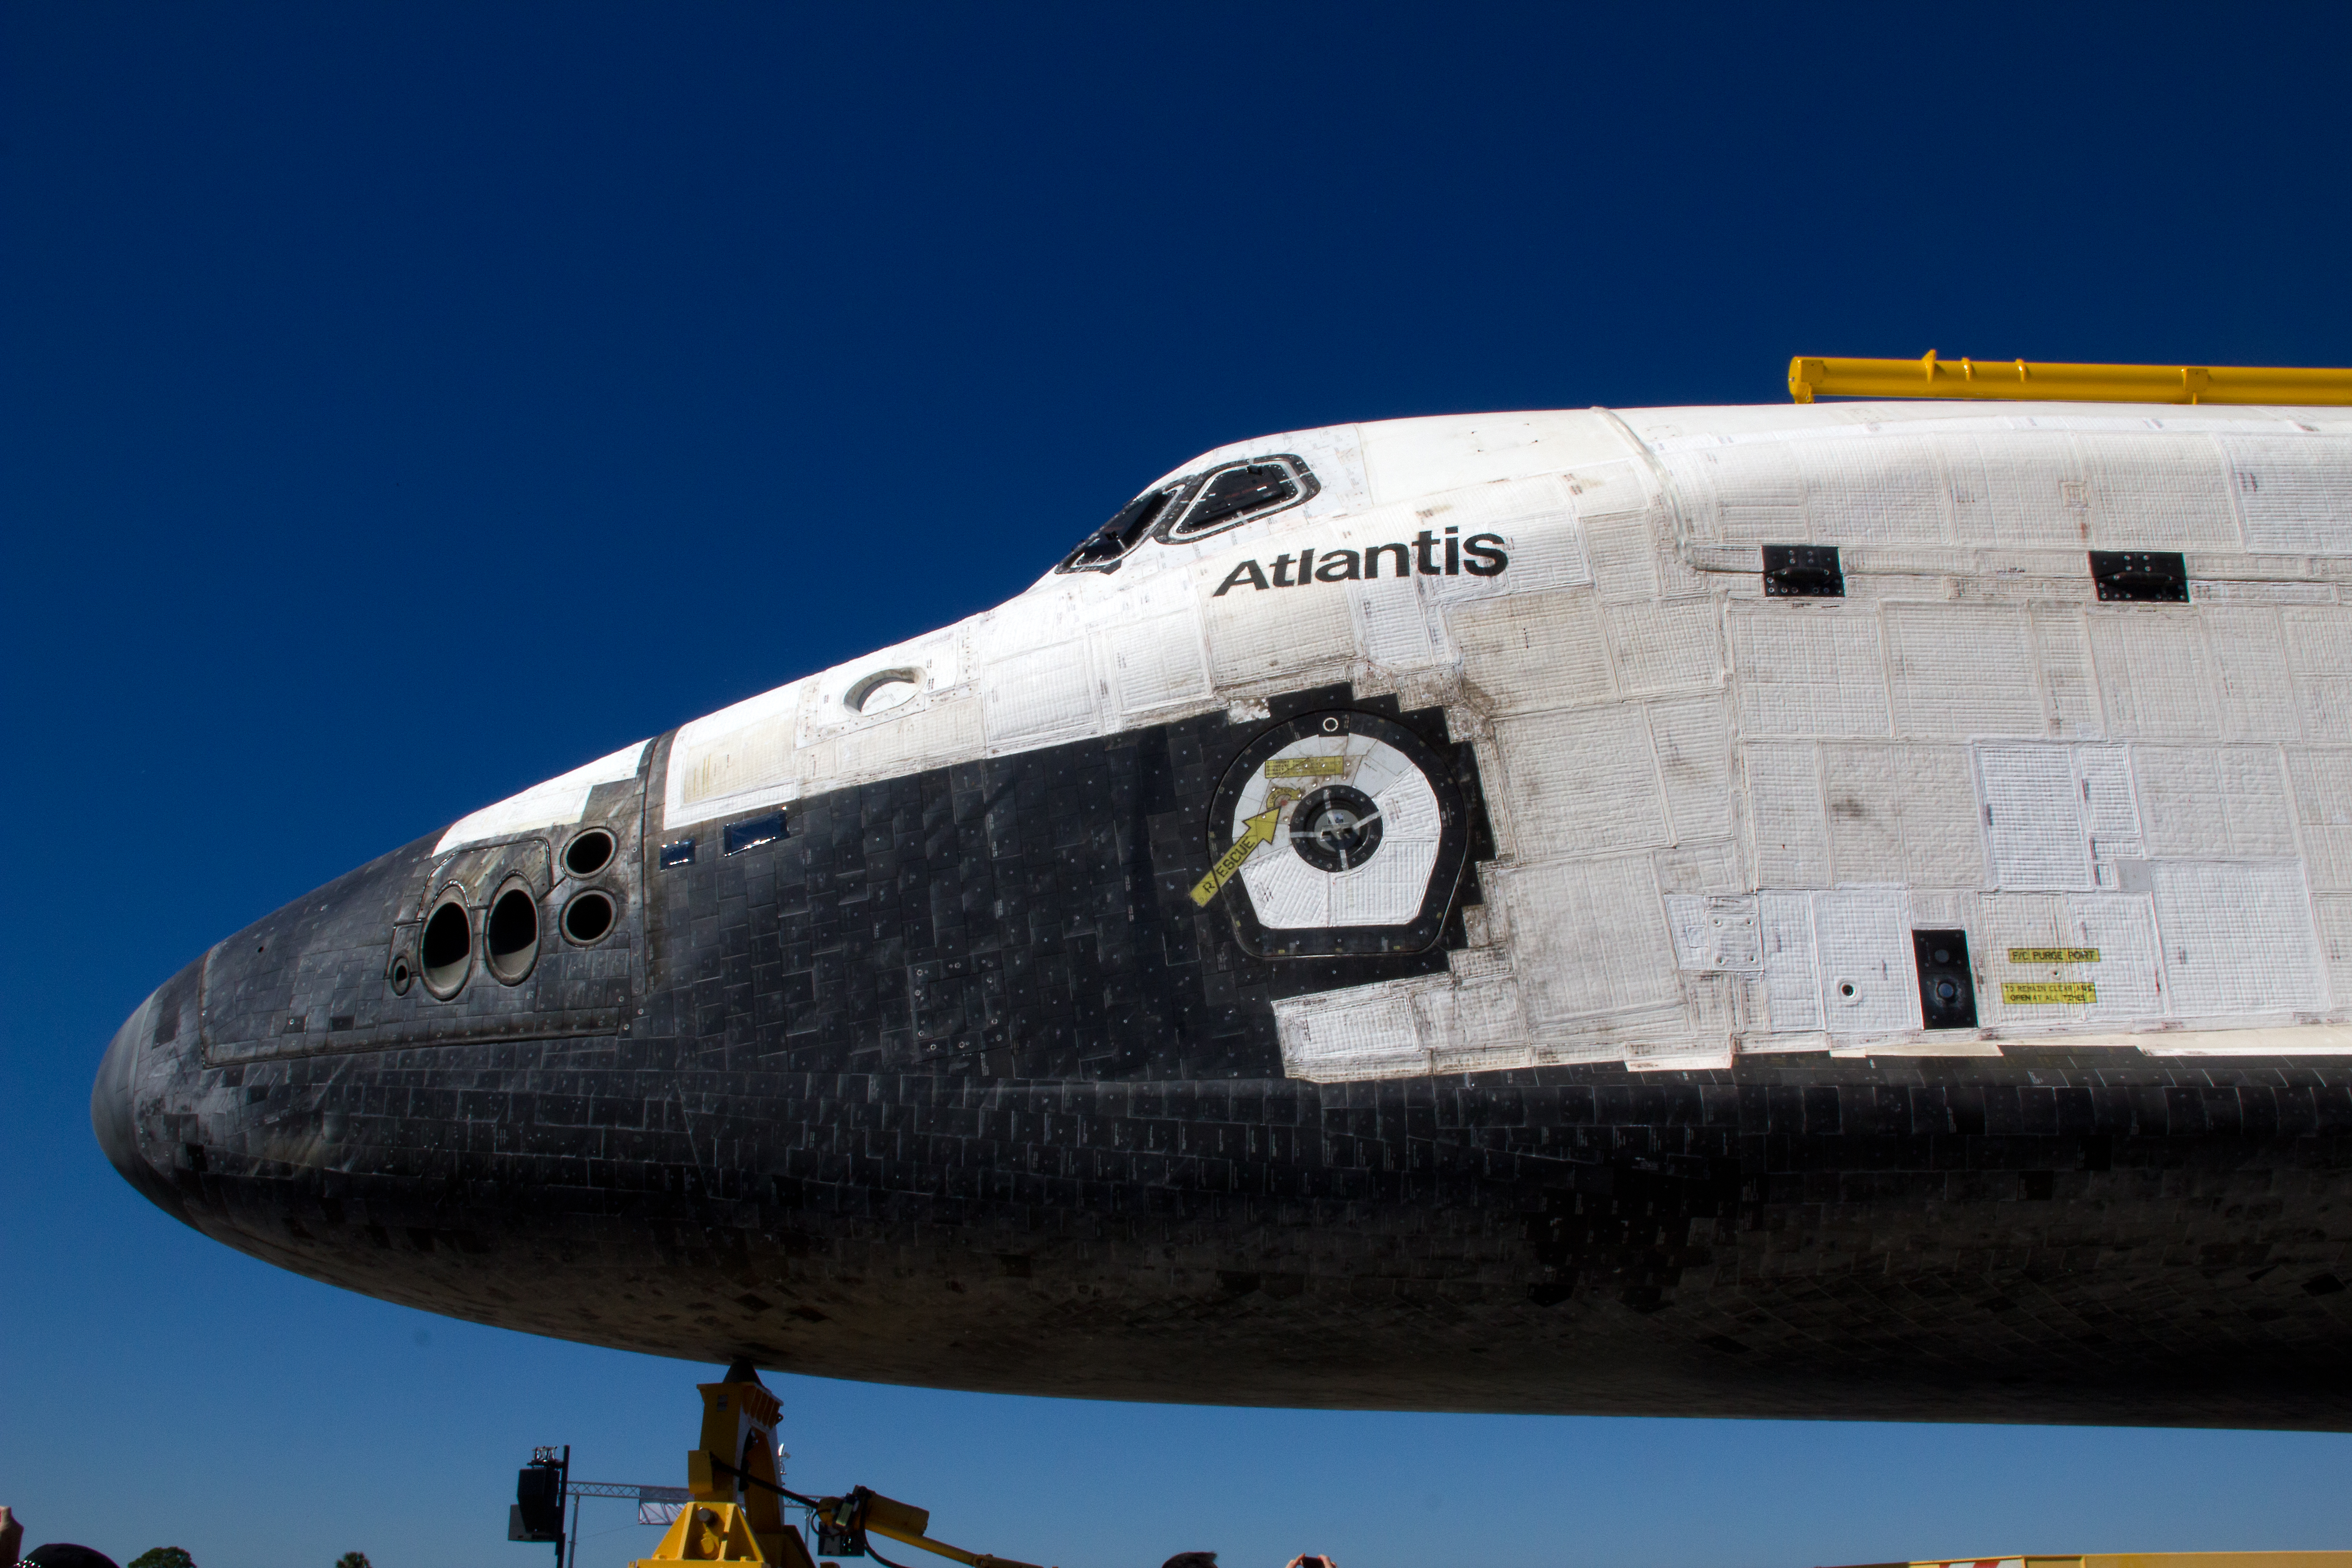 Vehicles Space Shuttle Atlantis 6144x4096